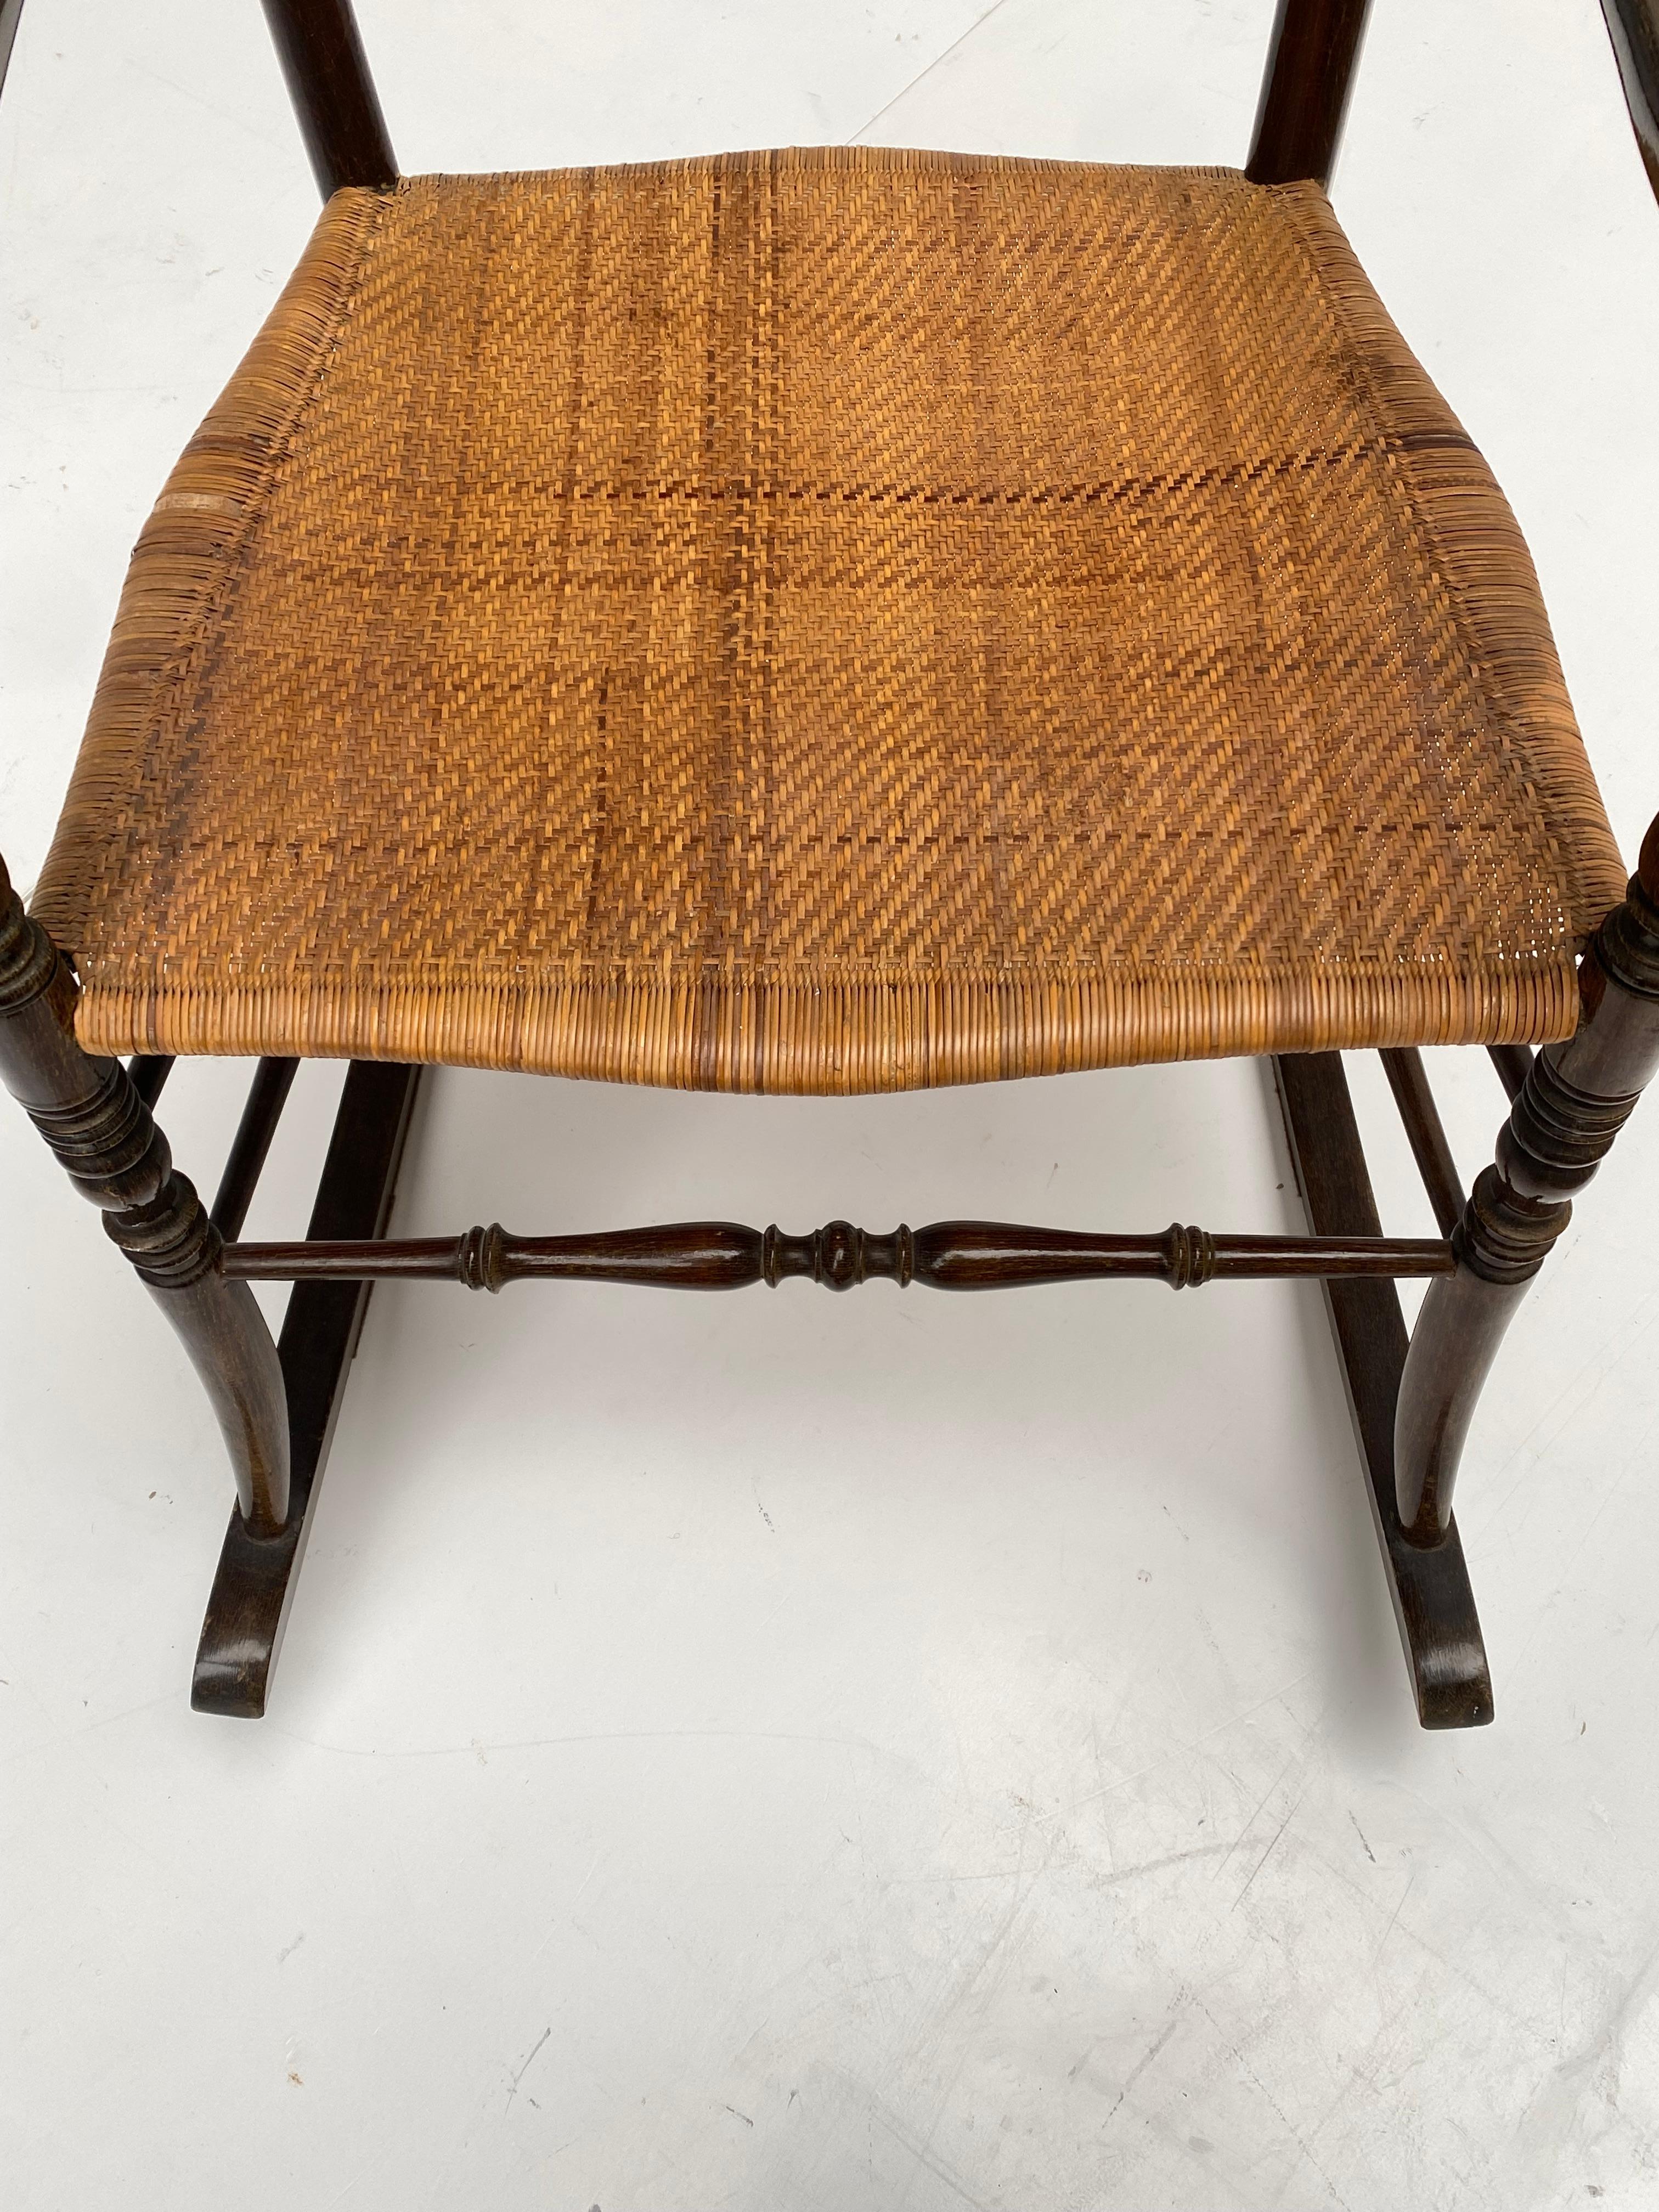 1950s Italian Chiavari Rocking Chair with Original Woven Seat For Sale 5